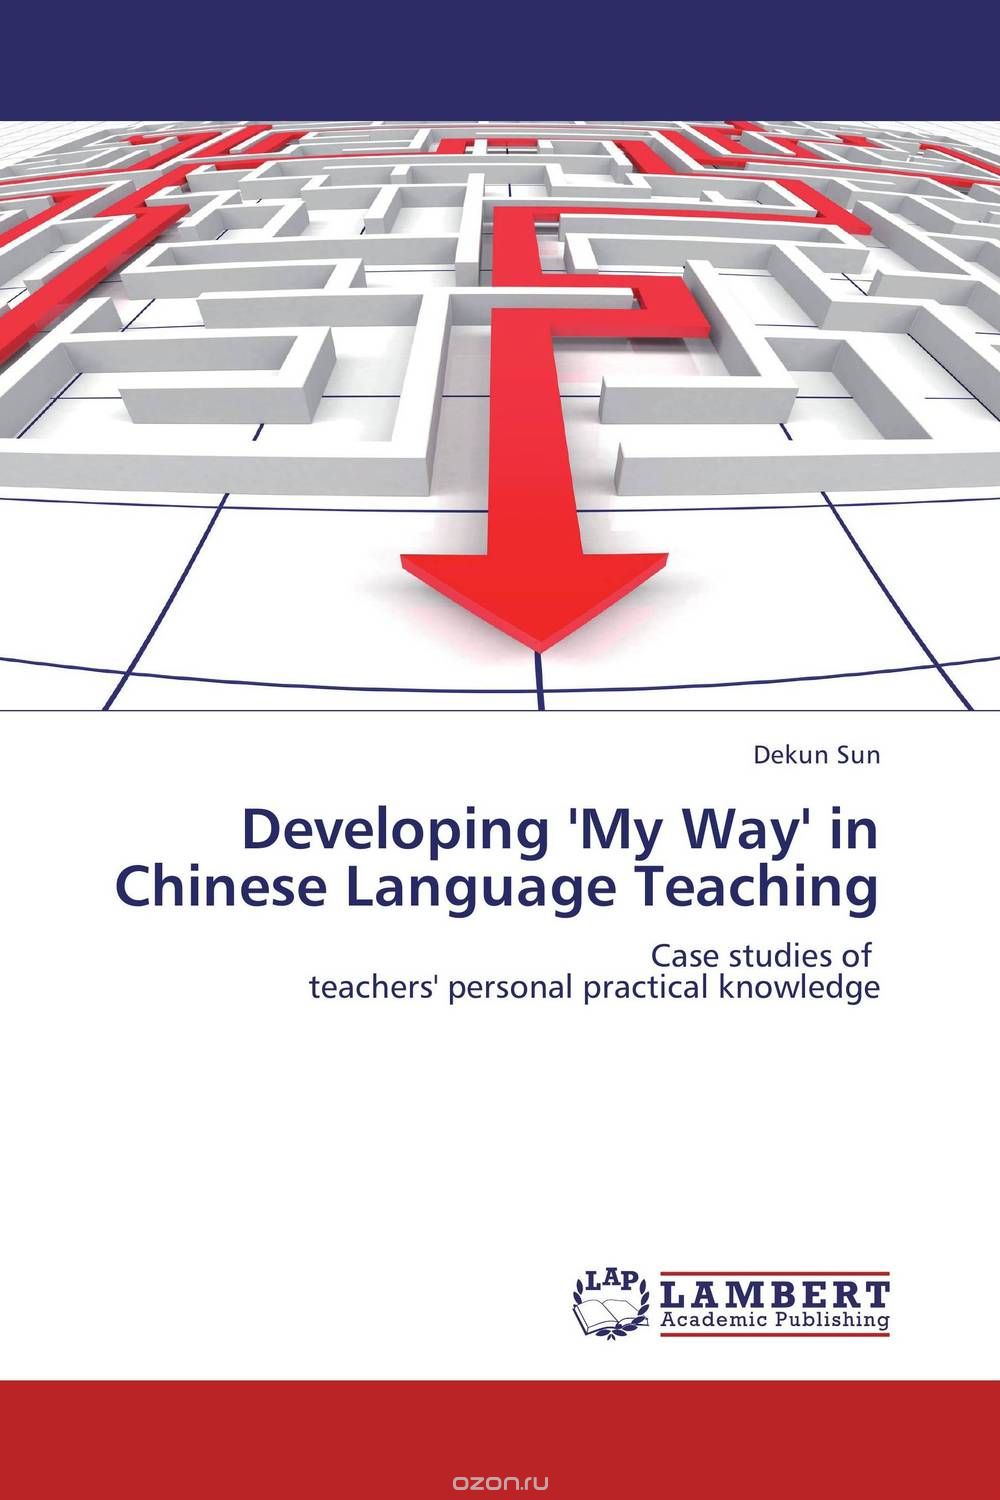 Скачать книгу "Developing 'My Way' in Chinese Language Teaching"